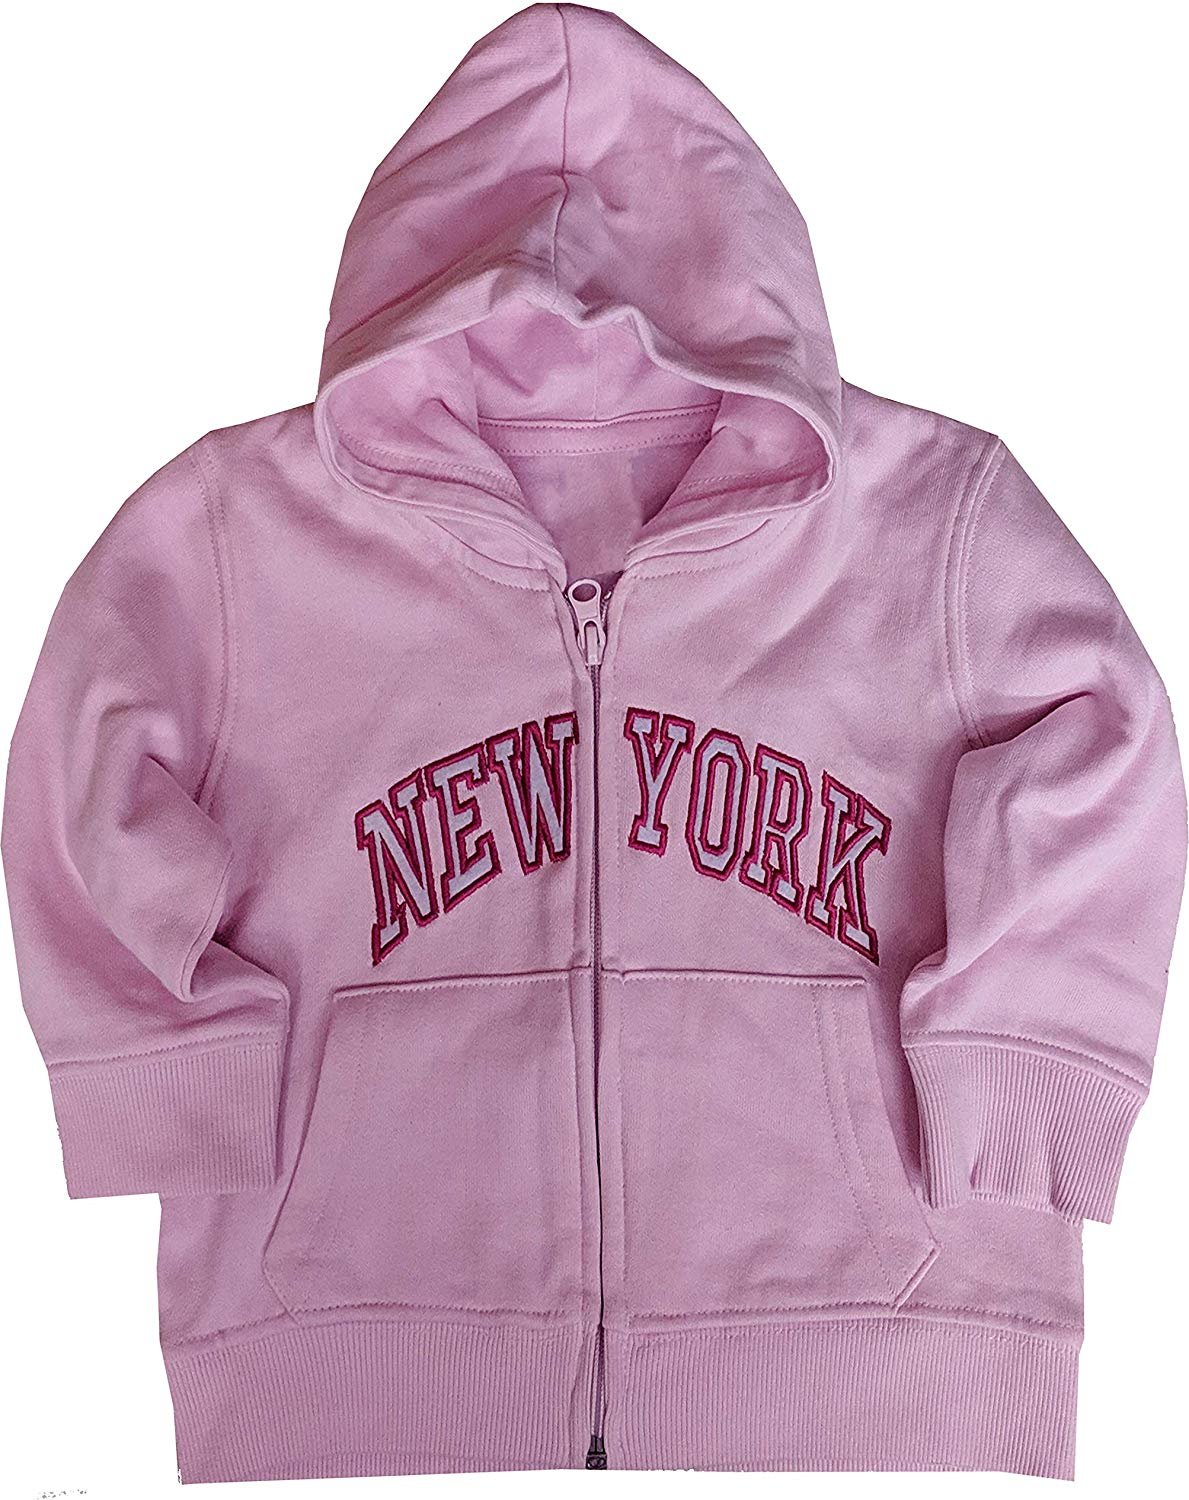 New York City Infant Baby Zippered Hoodies Sweatshirt NYC Gifts